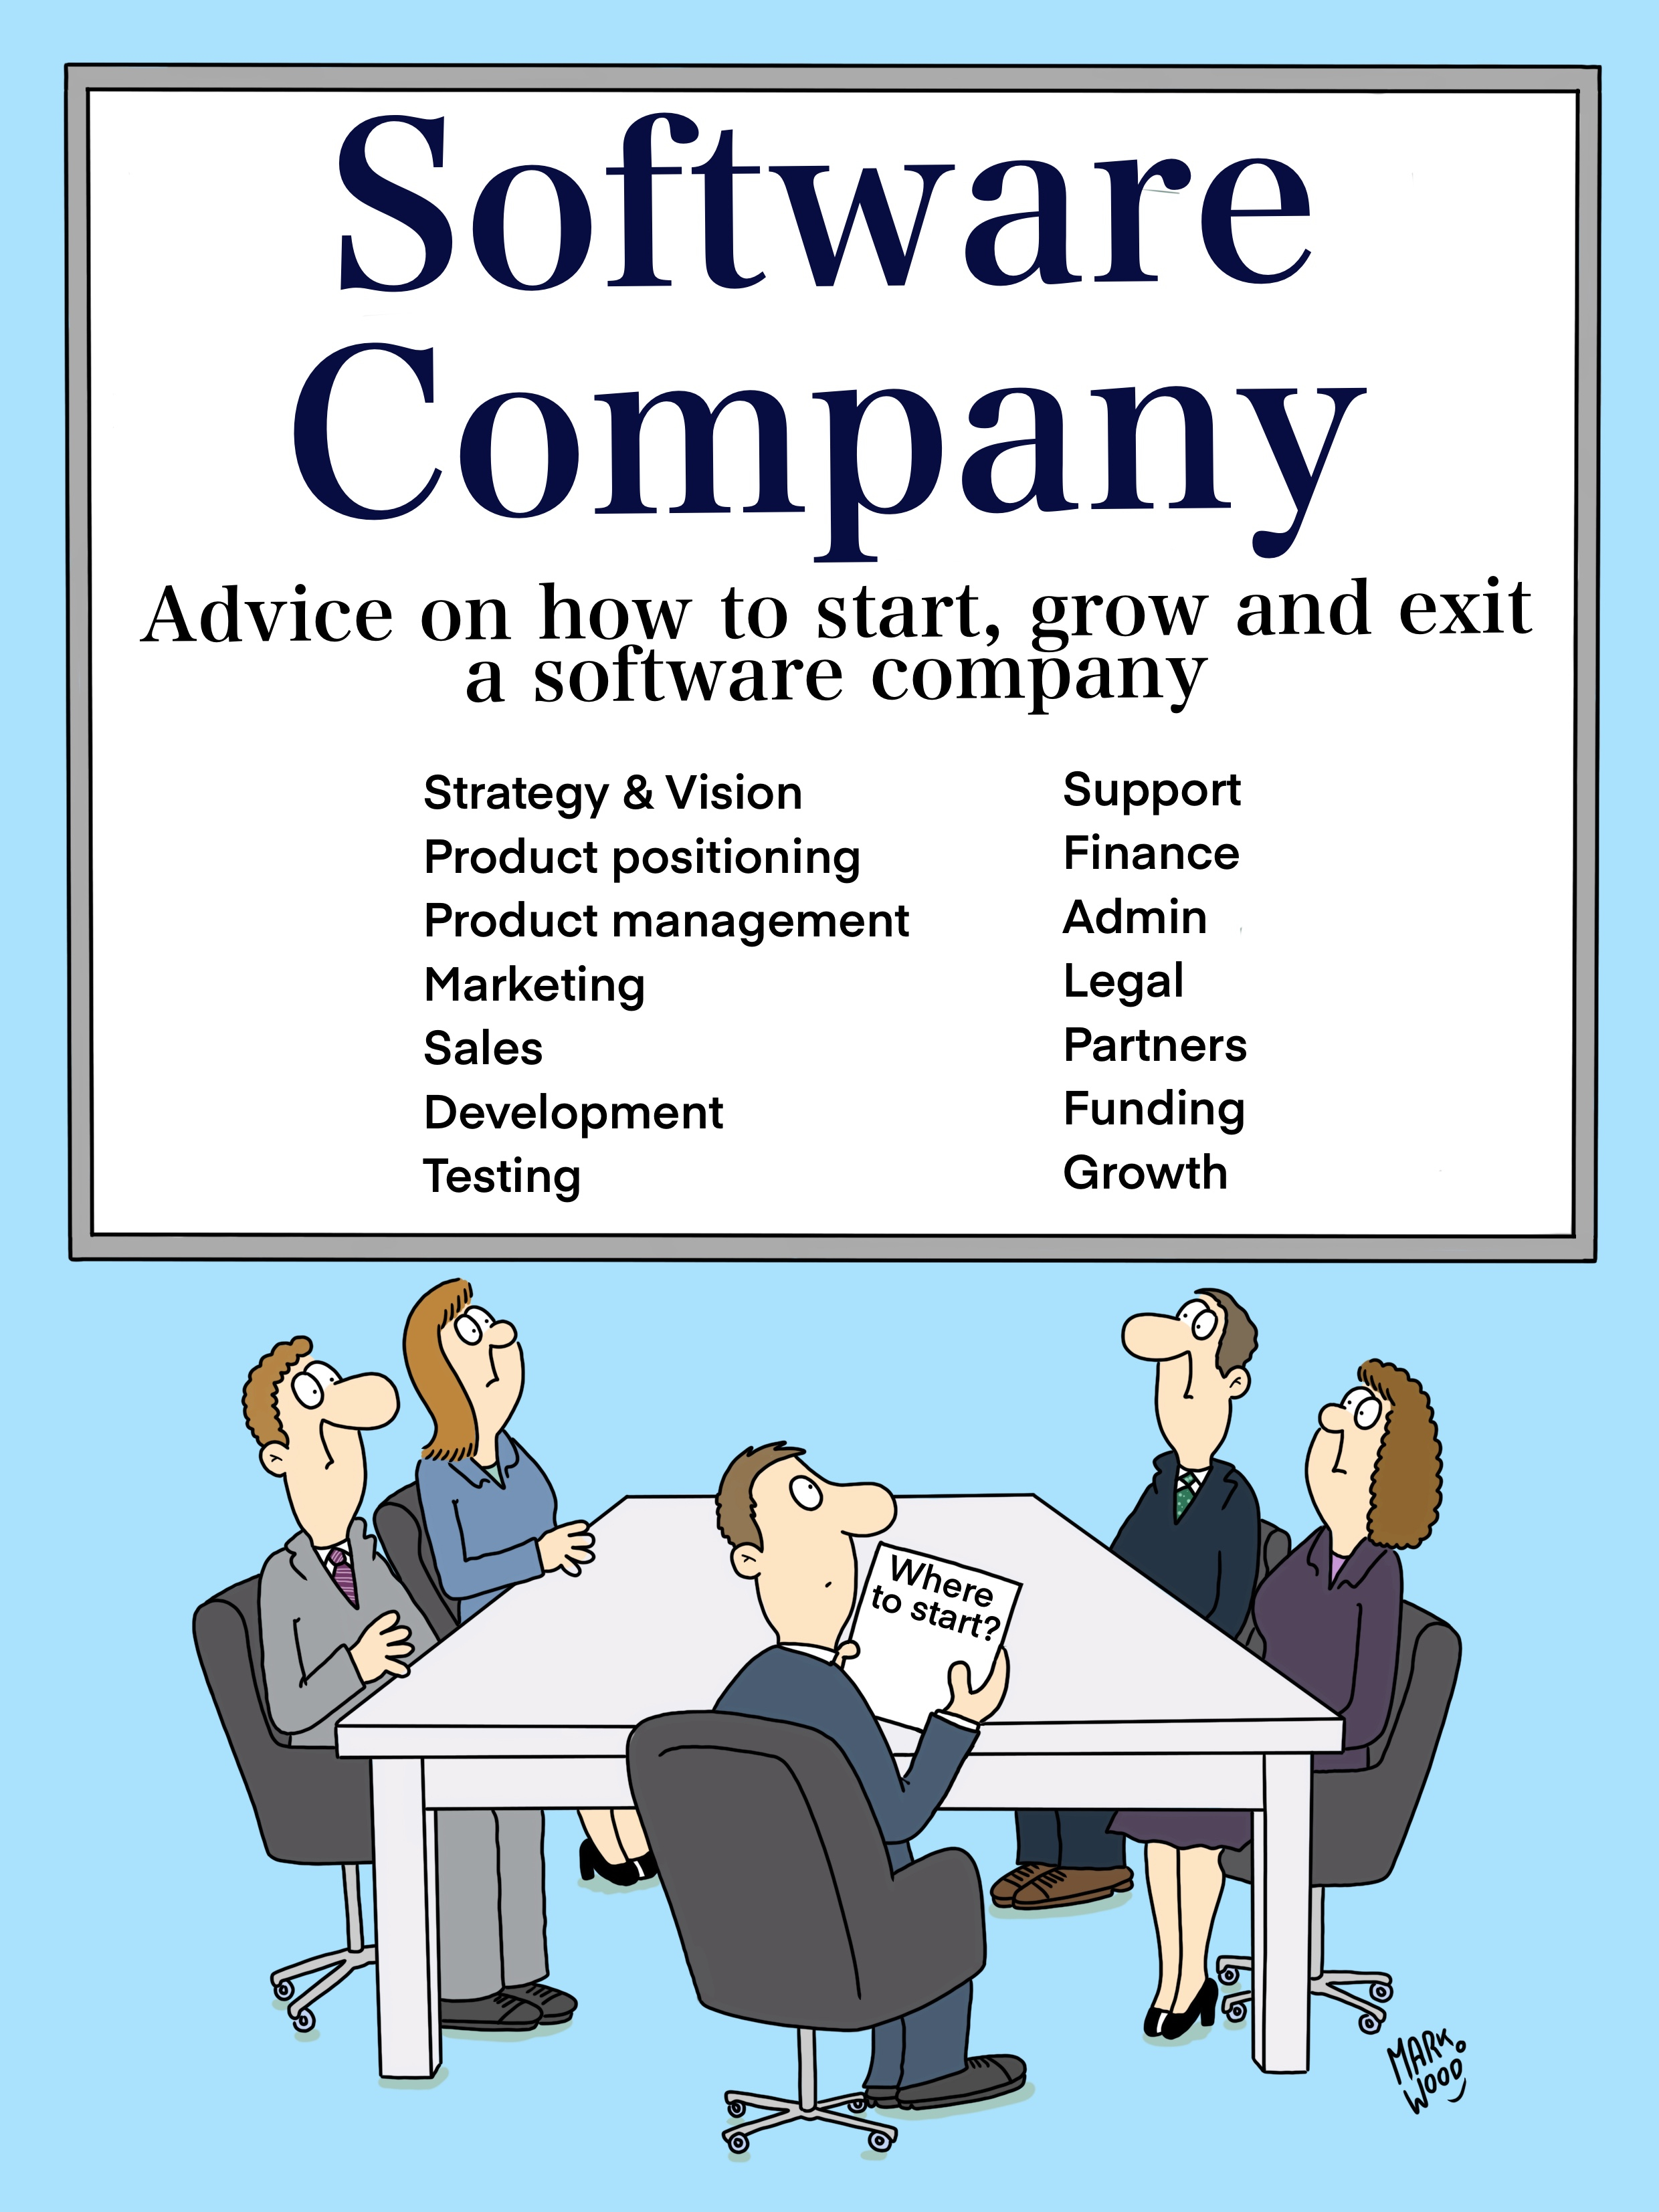 Software Company Book Cover Illustration